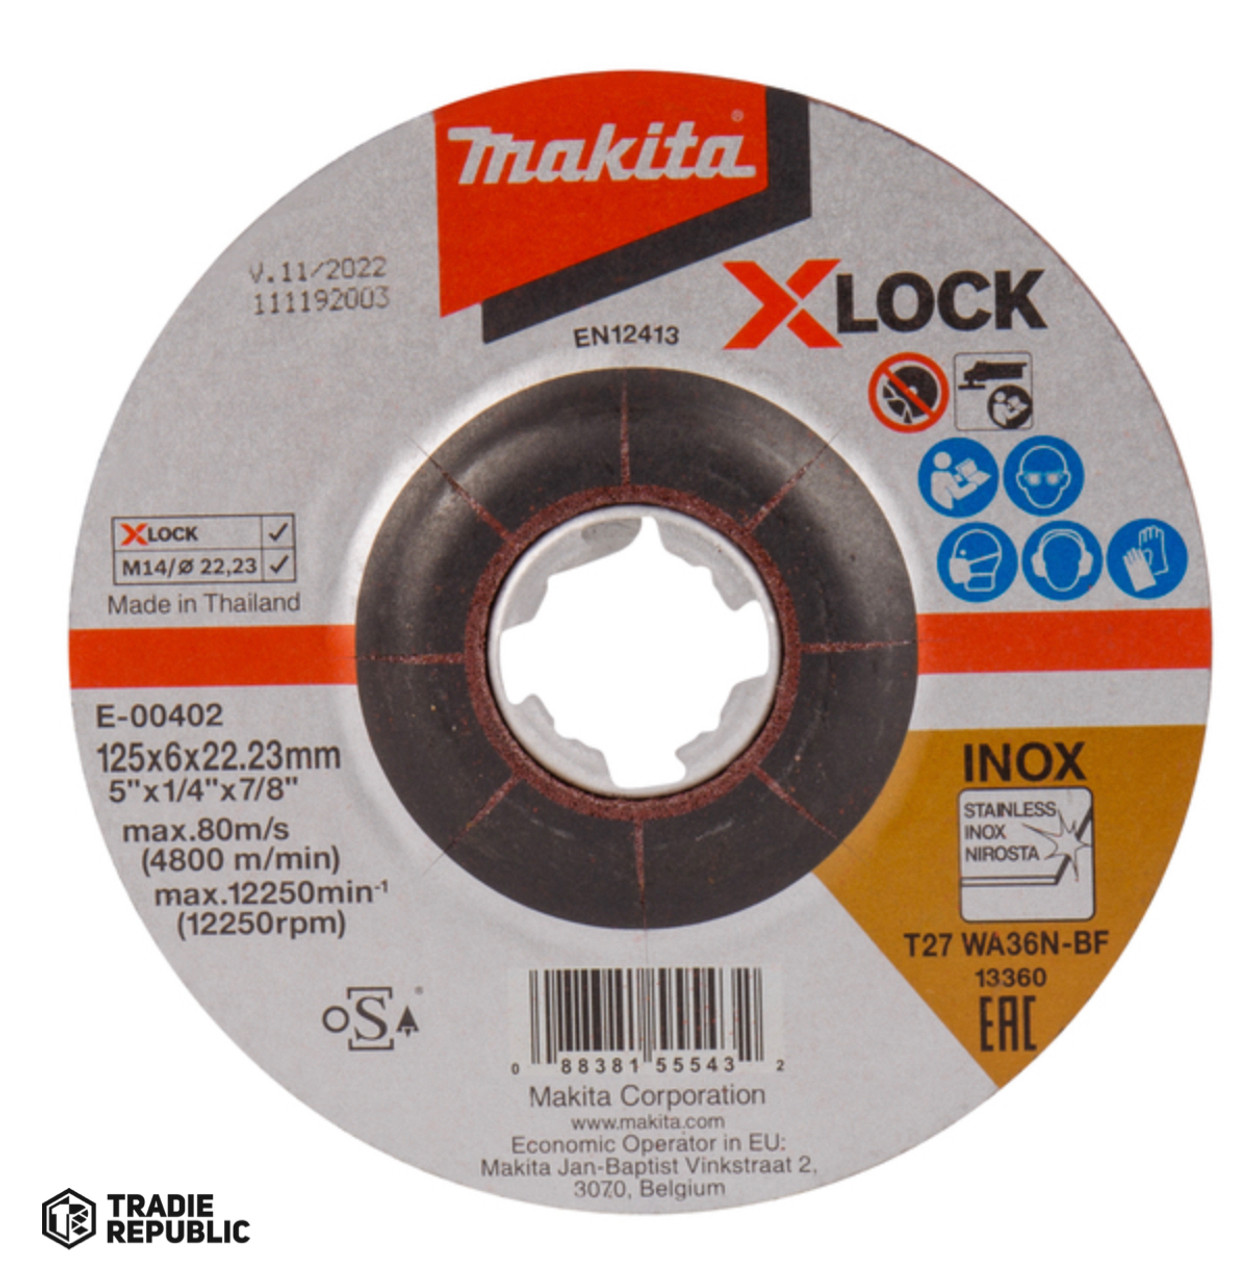 E-00402 Makita Grind Disc Xlock 125x6 Inox